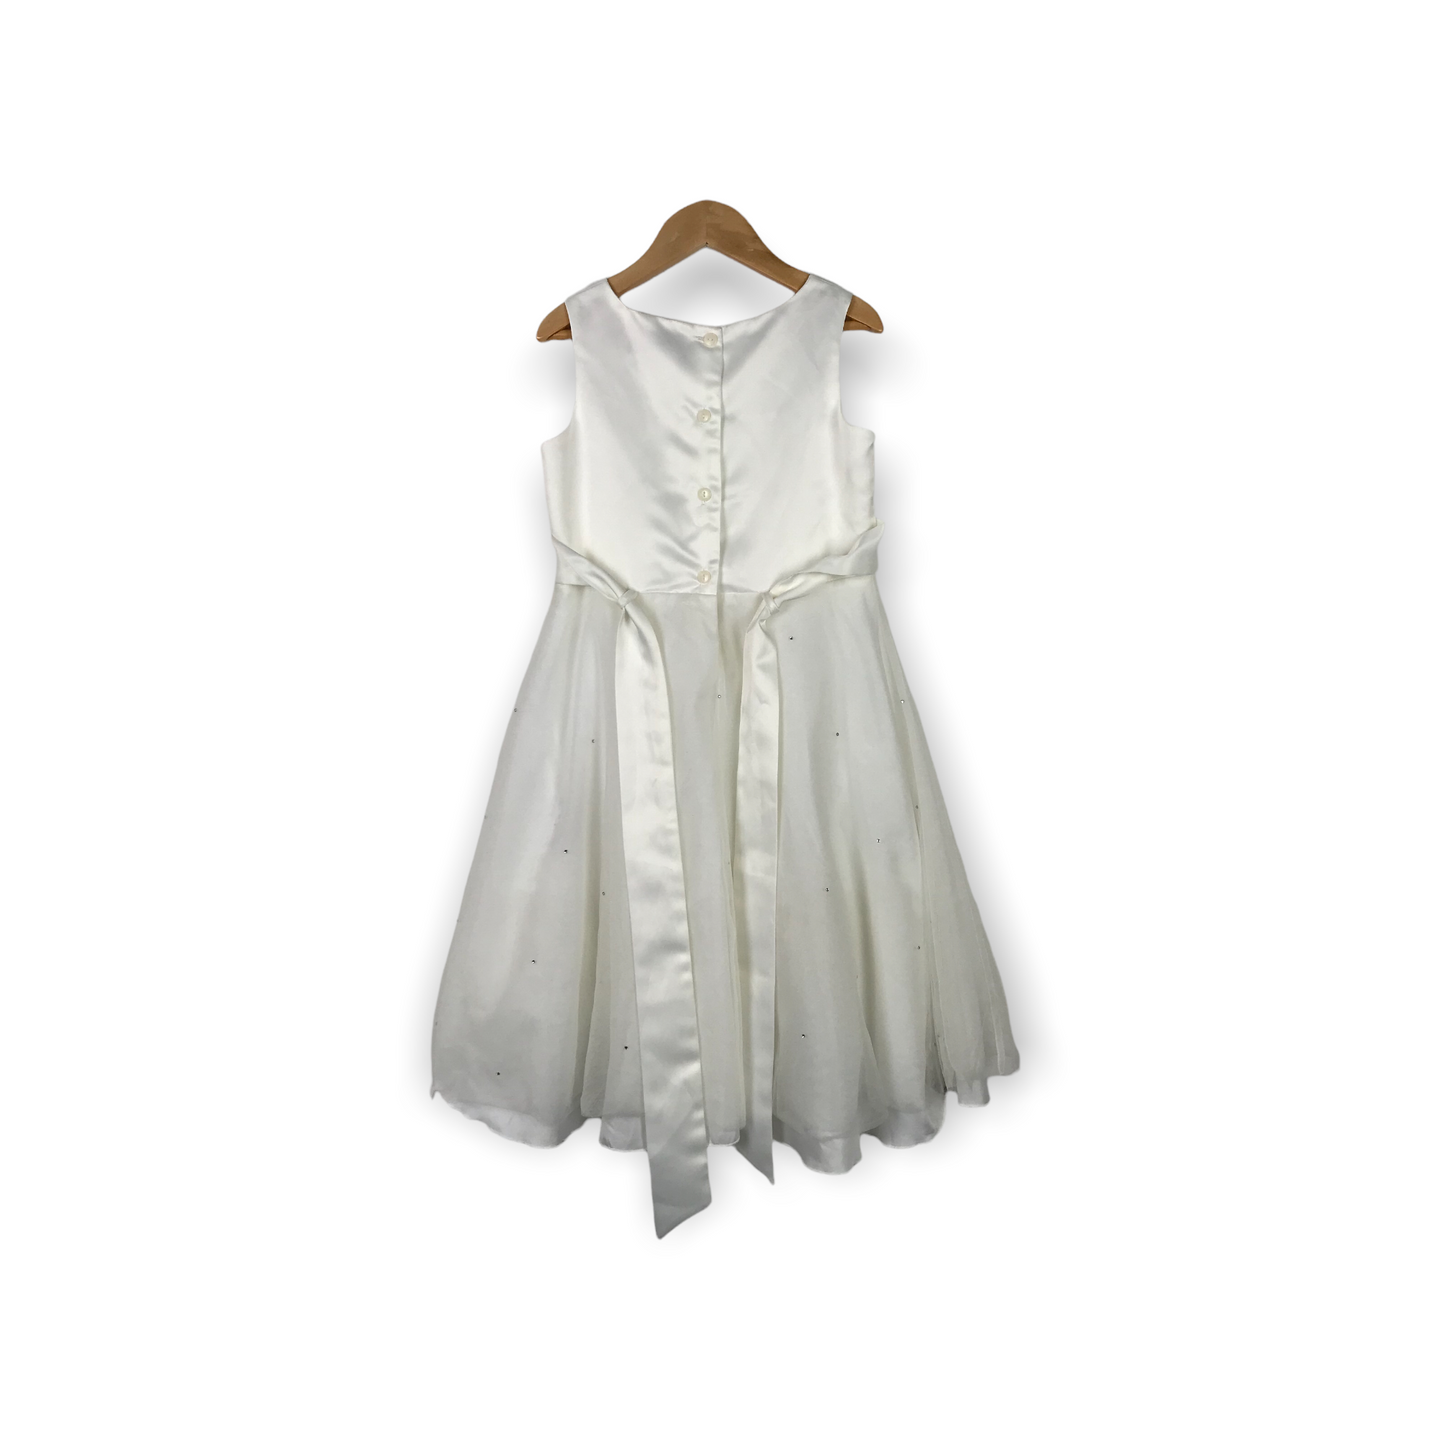 George White Chiffon Style Gem Detail Formal Dress Age 6